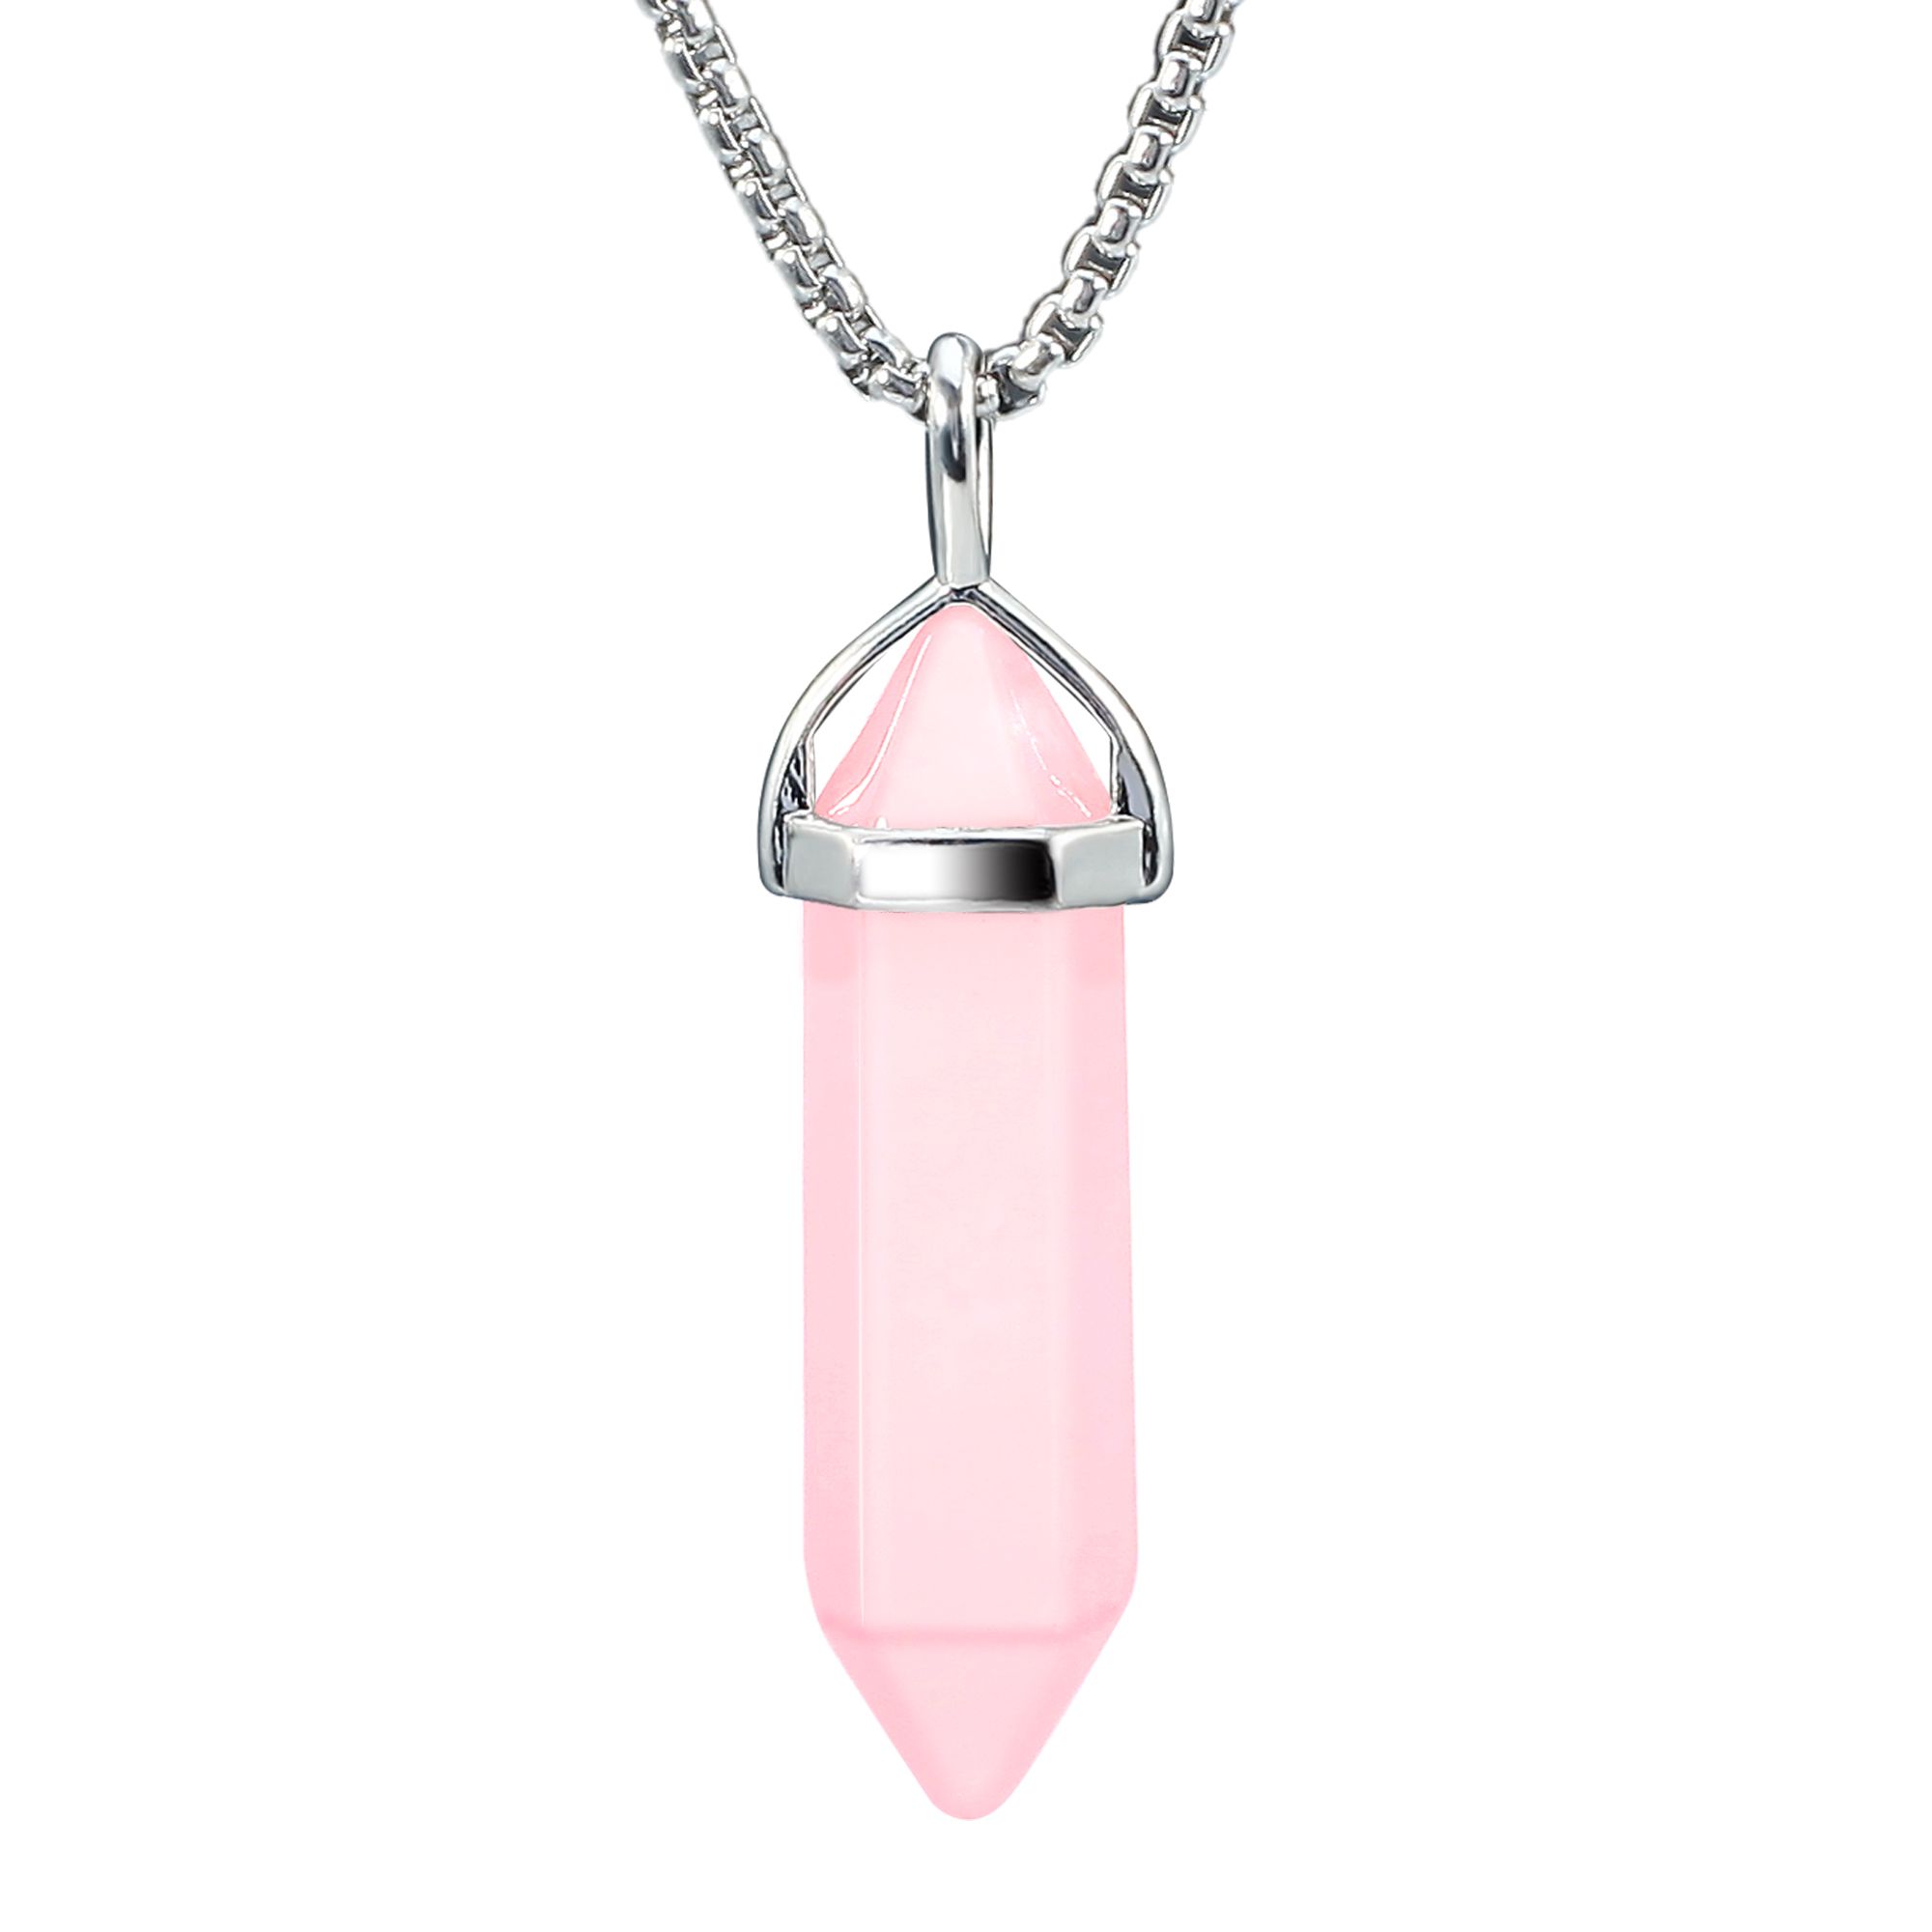 Rose quartz necklace      nickel/&lead free chain